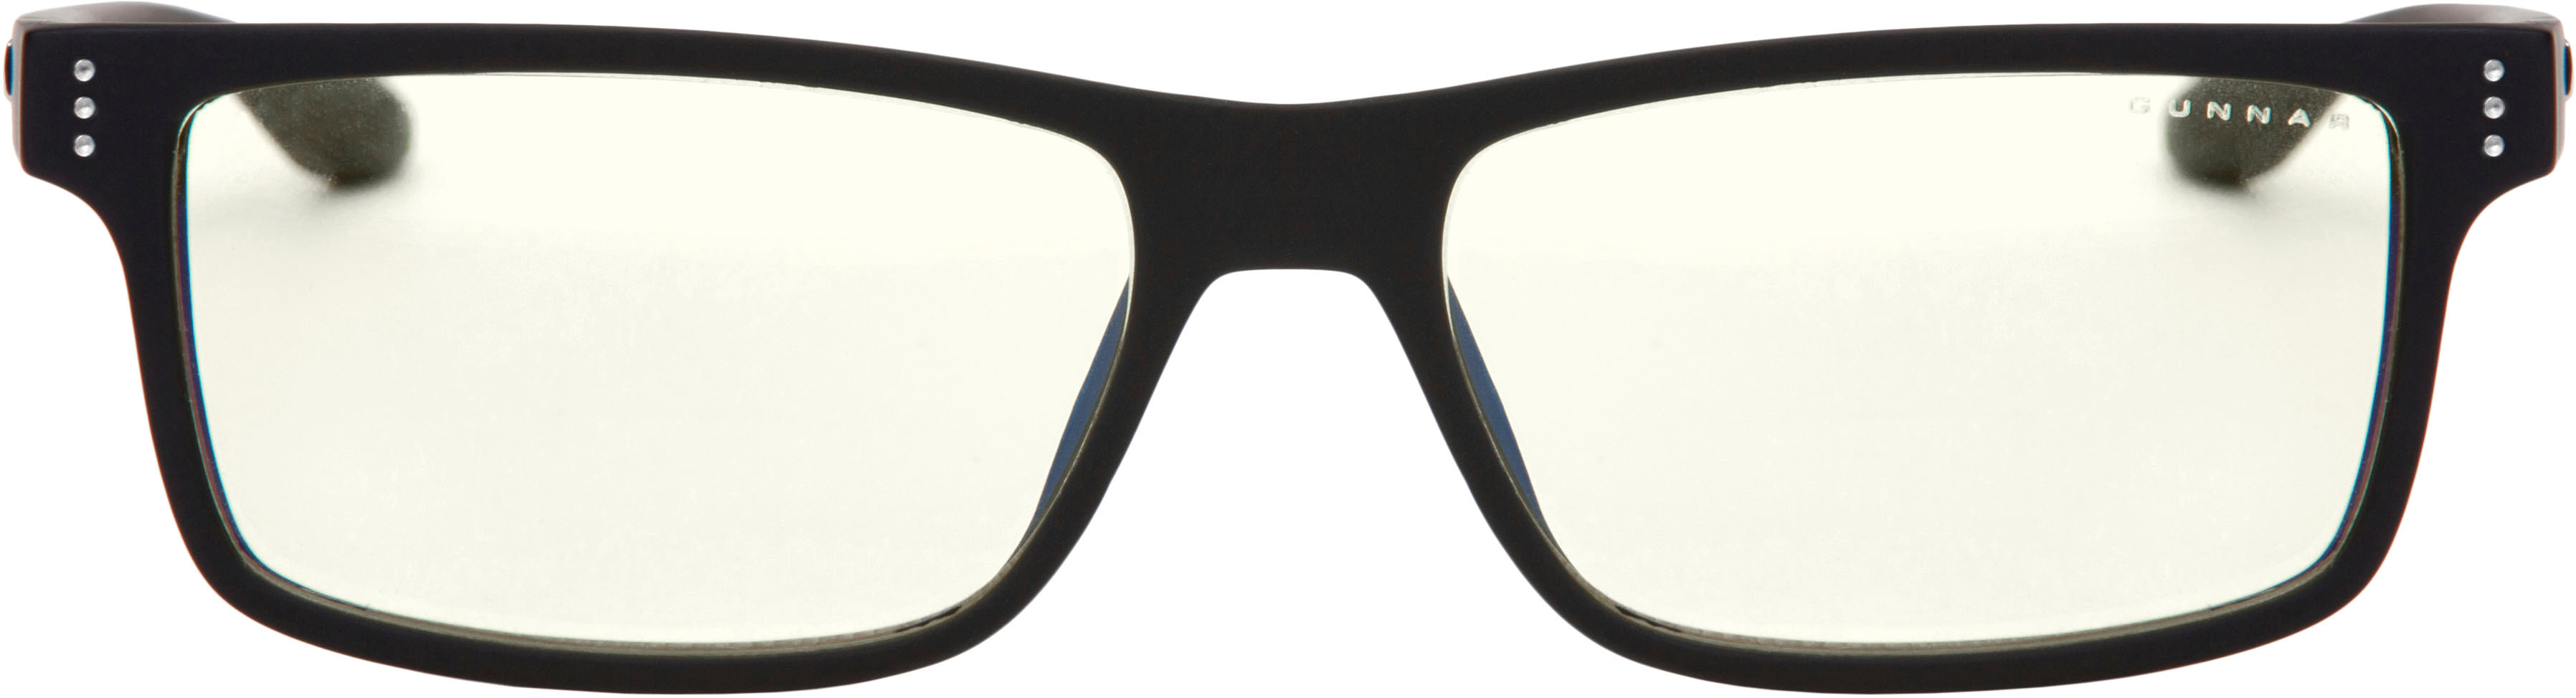 Angle View: GUNNAR - Blue Light Reading Glasses - Vertex +2.0 - Onyx